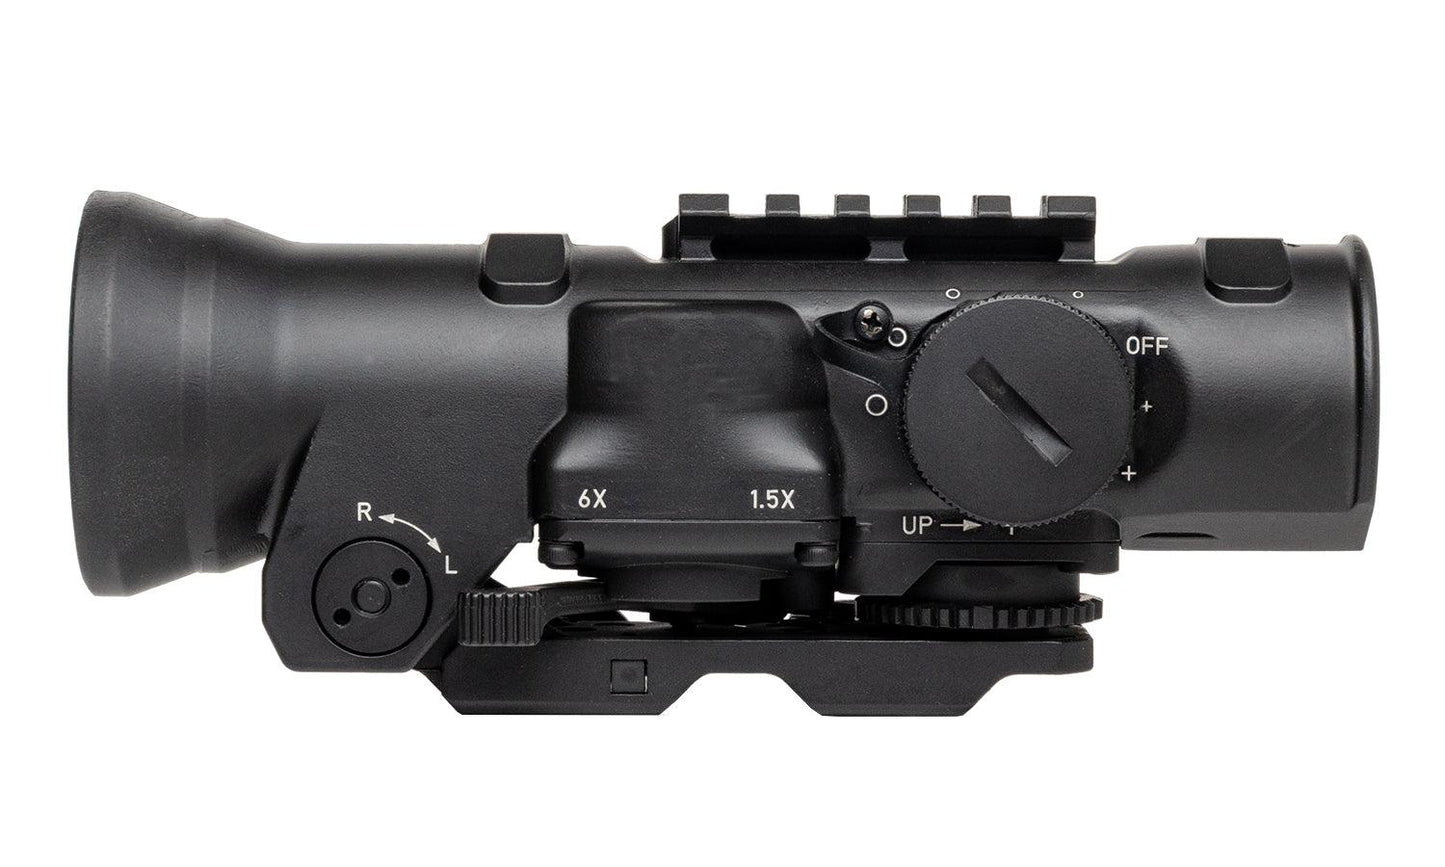 ELCAN SpecterDR Rifle Scope 7.62 DFOV6-B146-C20 1.5x-6x Black - NVU